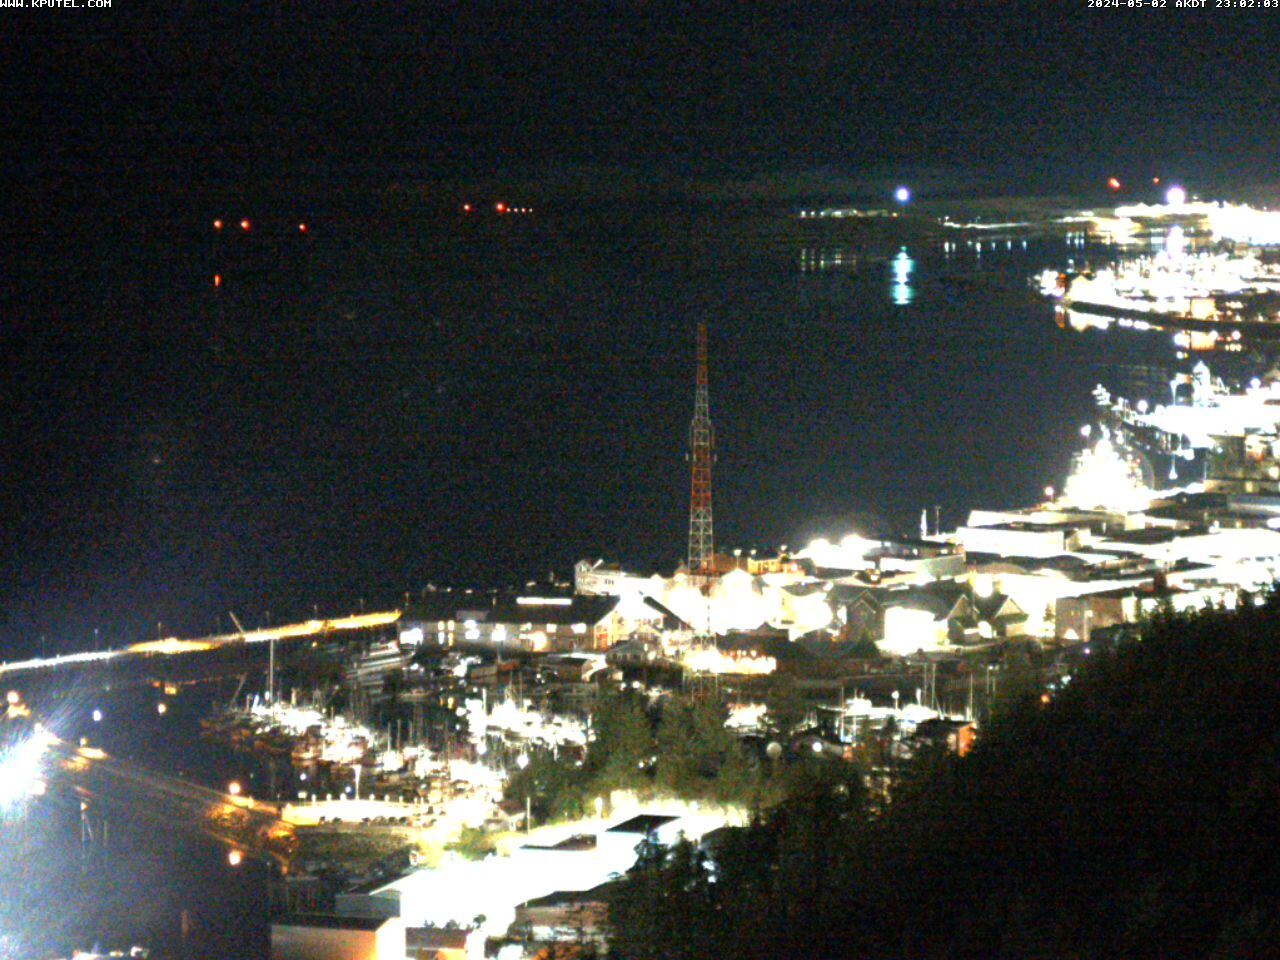 Current Ketchikan Webcam #7 Alaska-sized Image